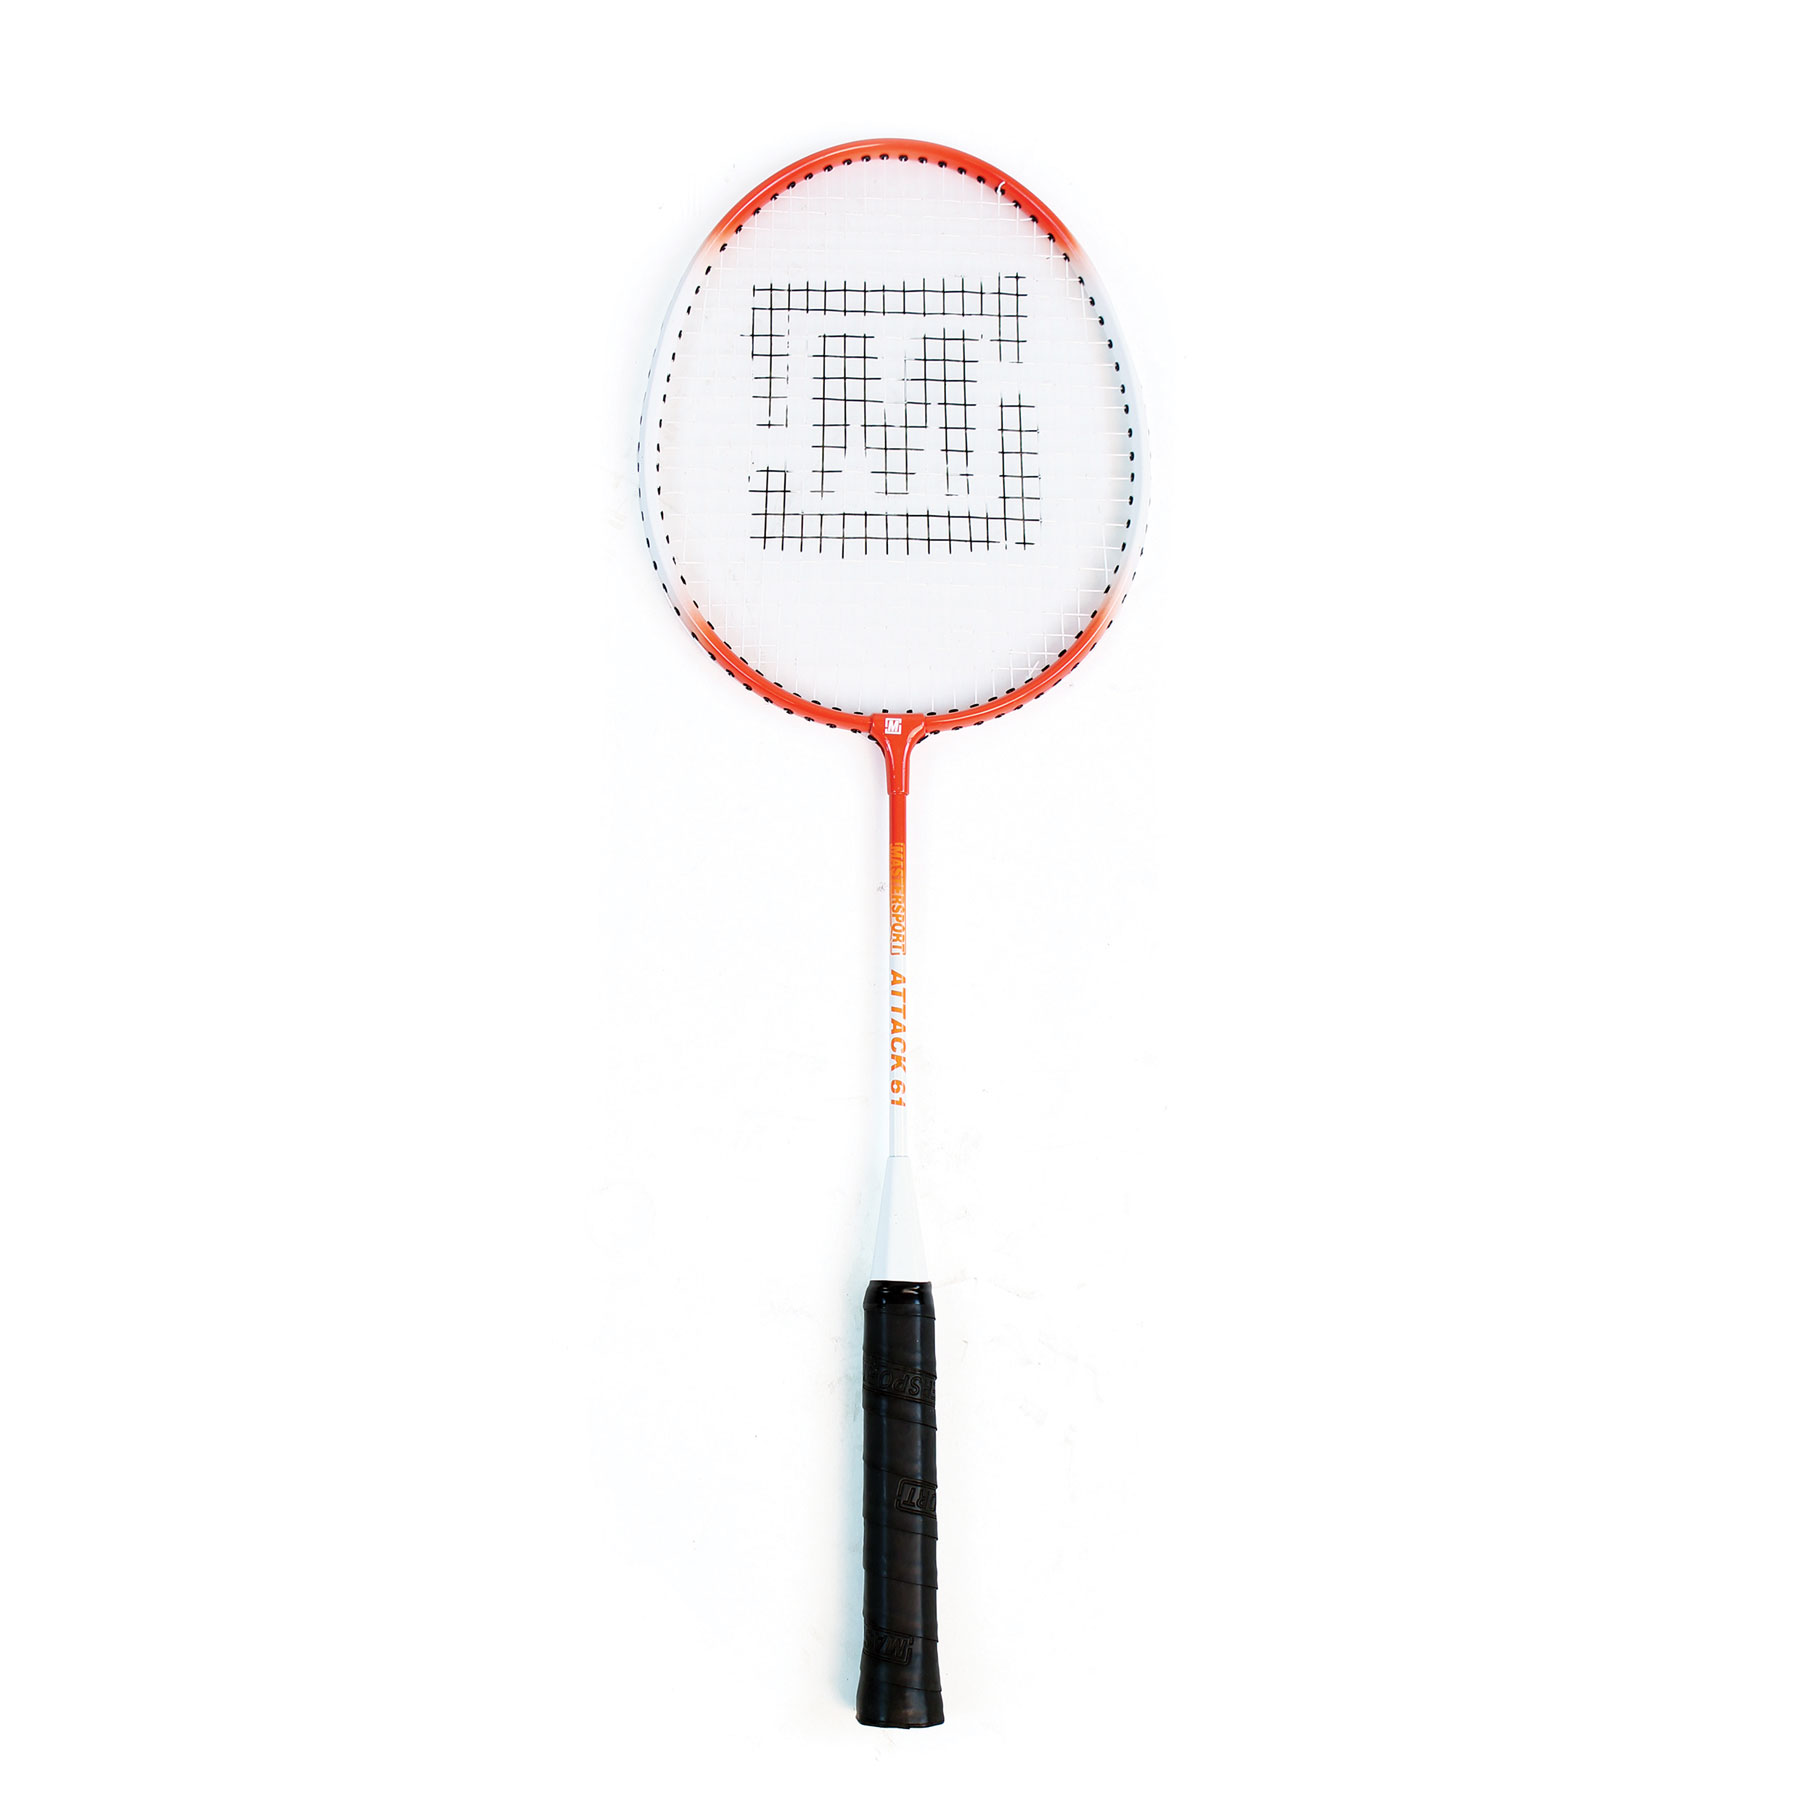 Mastersport Attack Badminton Racket